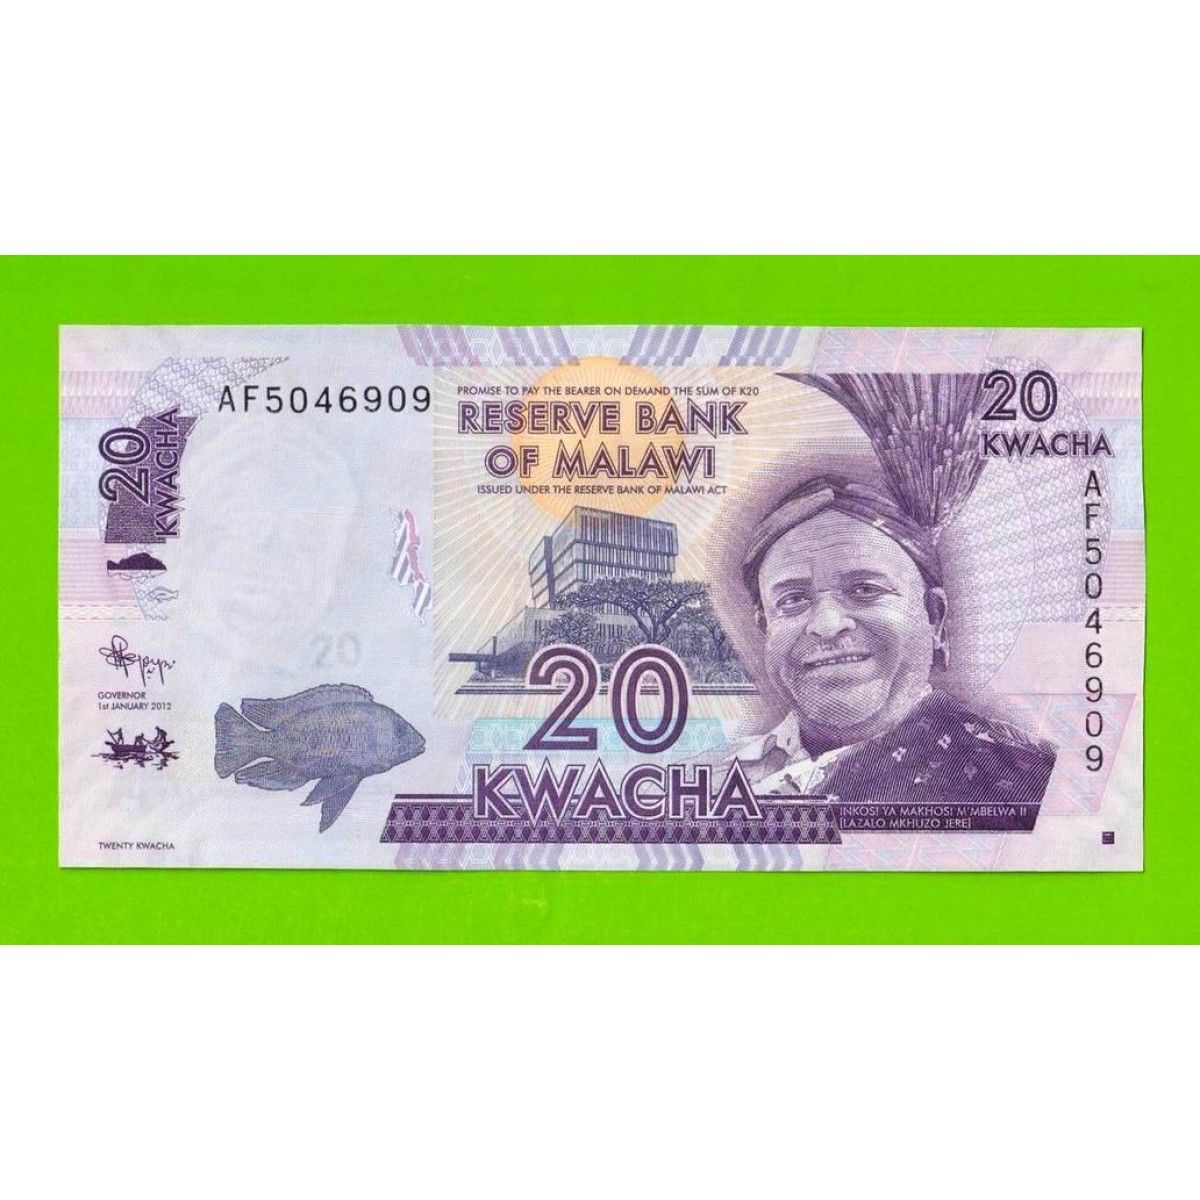 Купюр сайт. Банкнота Малави 20 квача. Реквизиты банкноты. Отзыв о банкноте.